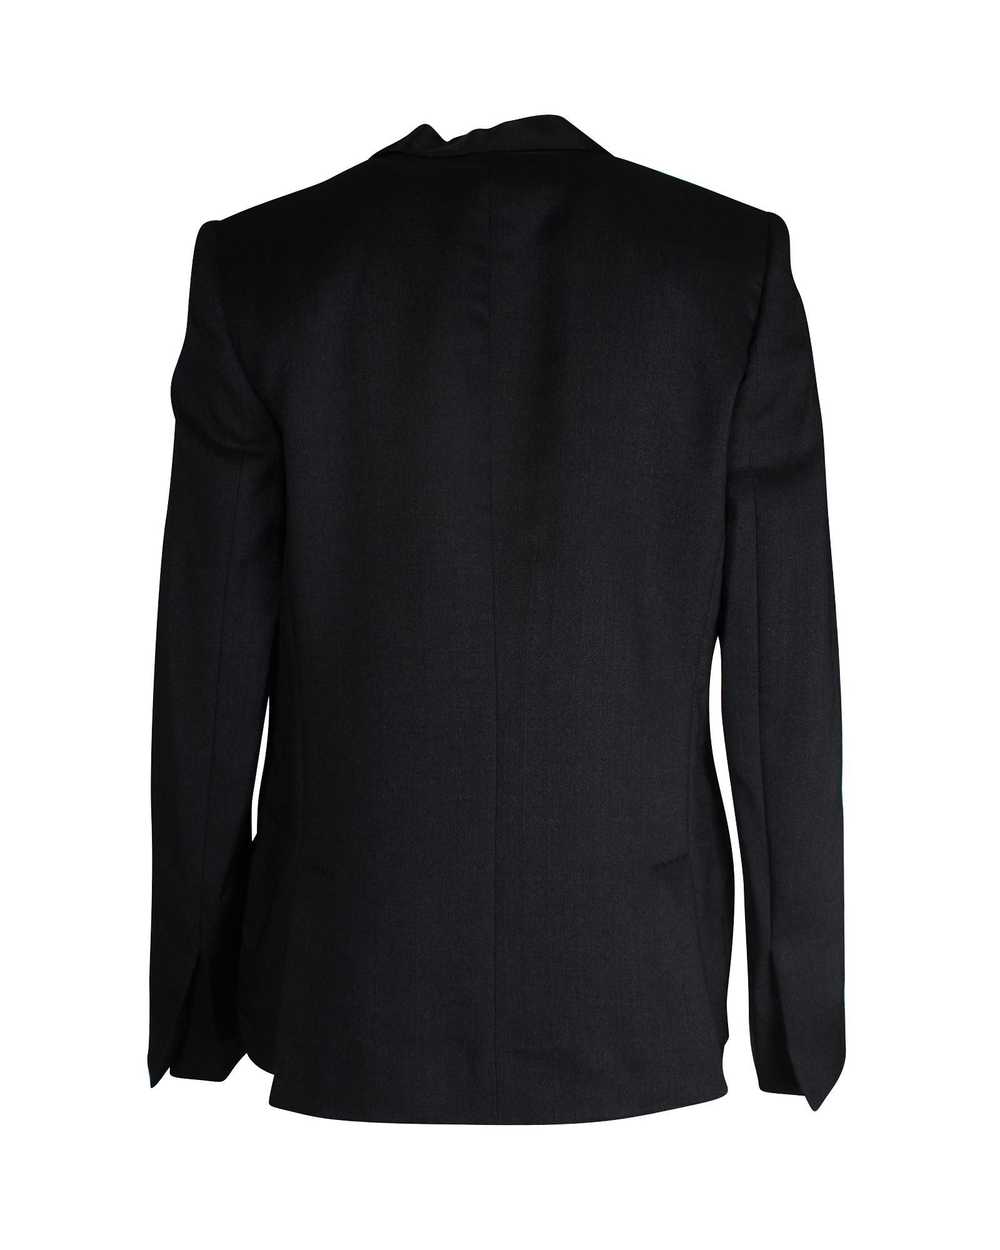 Stella McCartney Jacquard Collar Wool Blazer - image 3